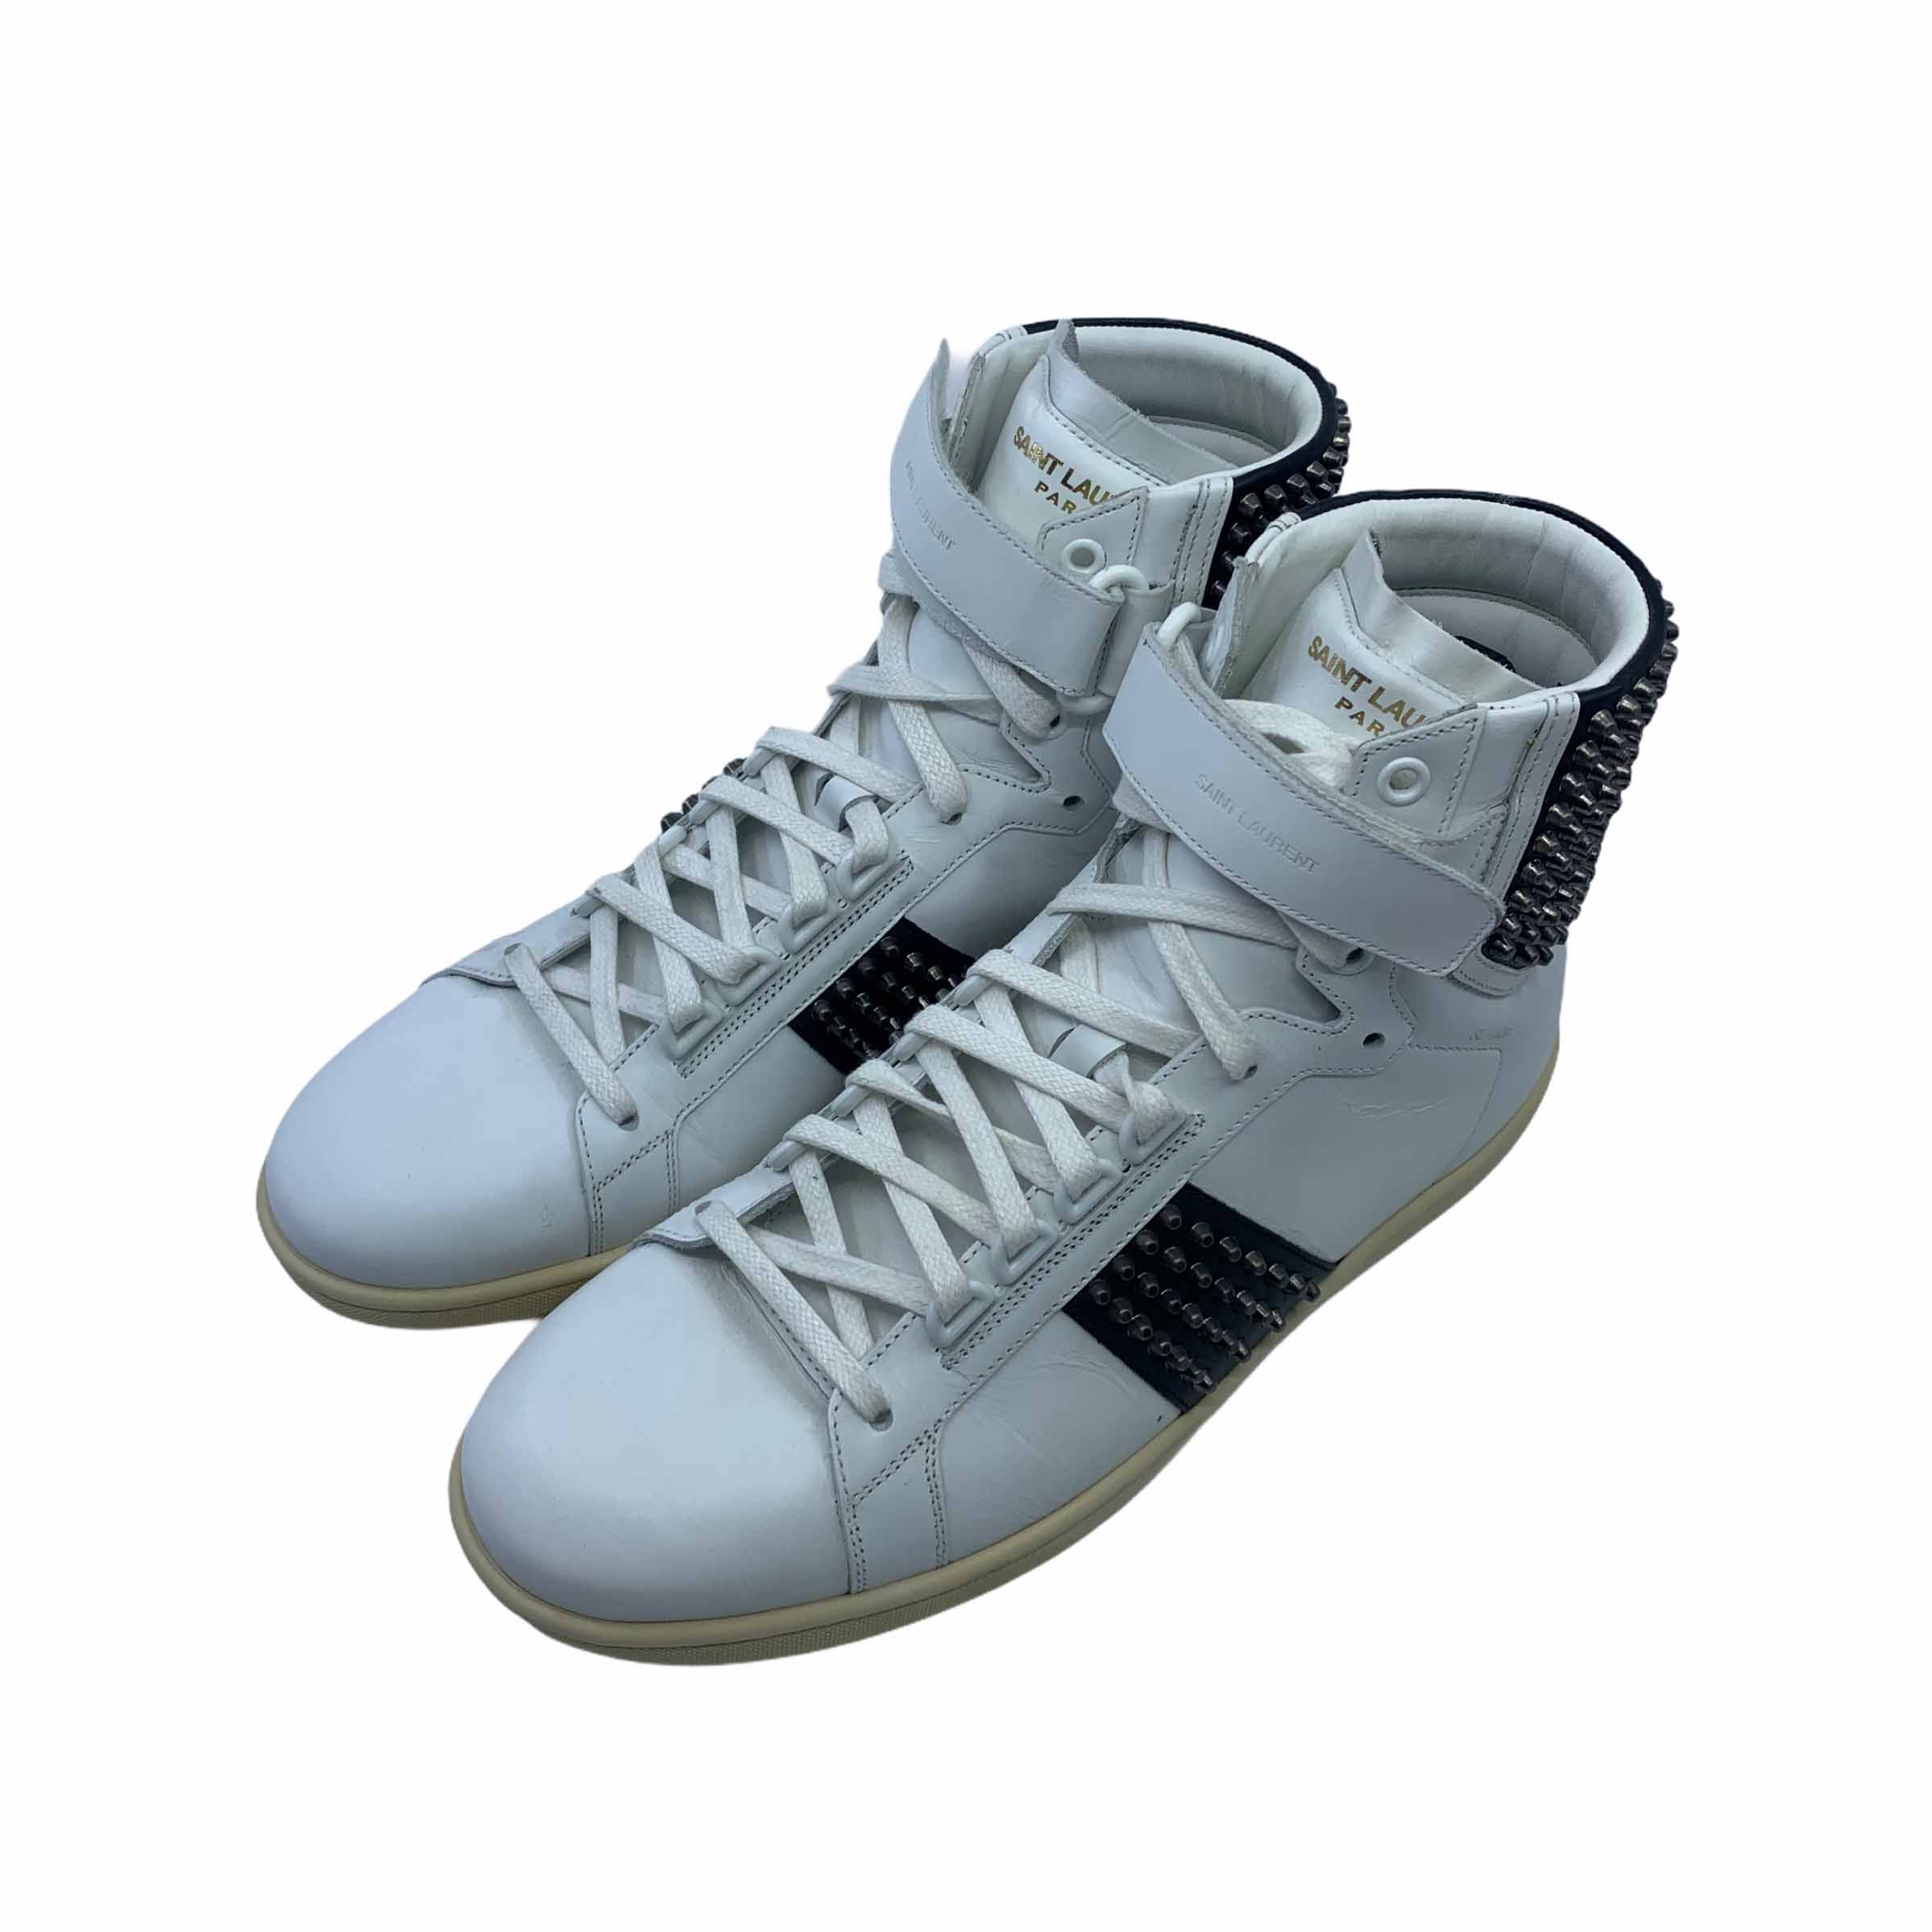 [Saint Laurent] Stud SL14H Hi-Top Sneakers - Size EUR42